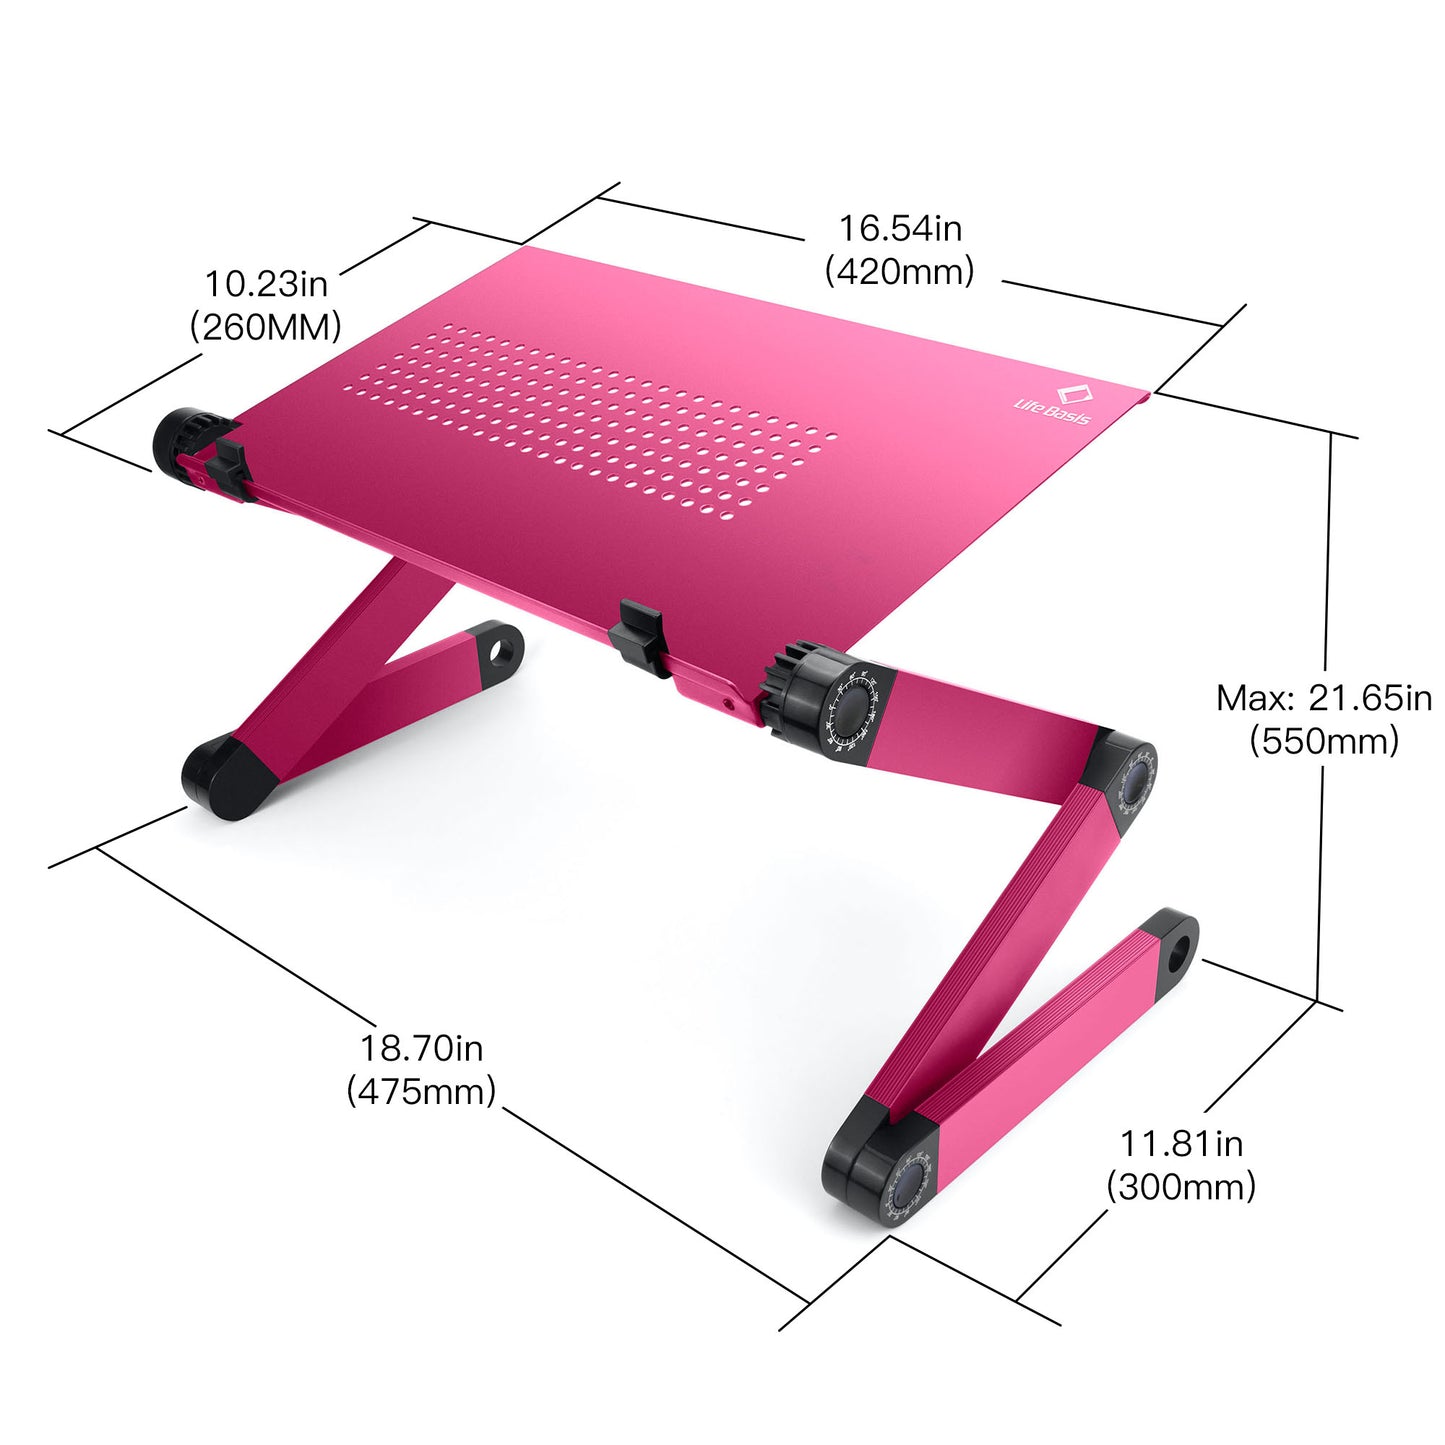 LifeBasis Portable Laptop Desk Lightweight Aluminum Folding Desk Sofa Bed Stand for Notebook MacBook